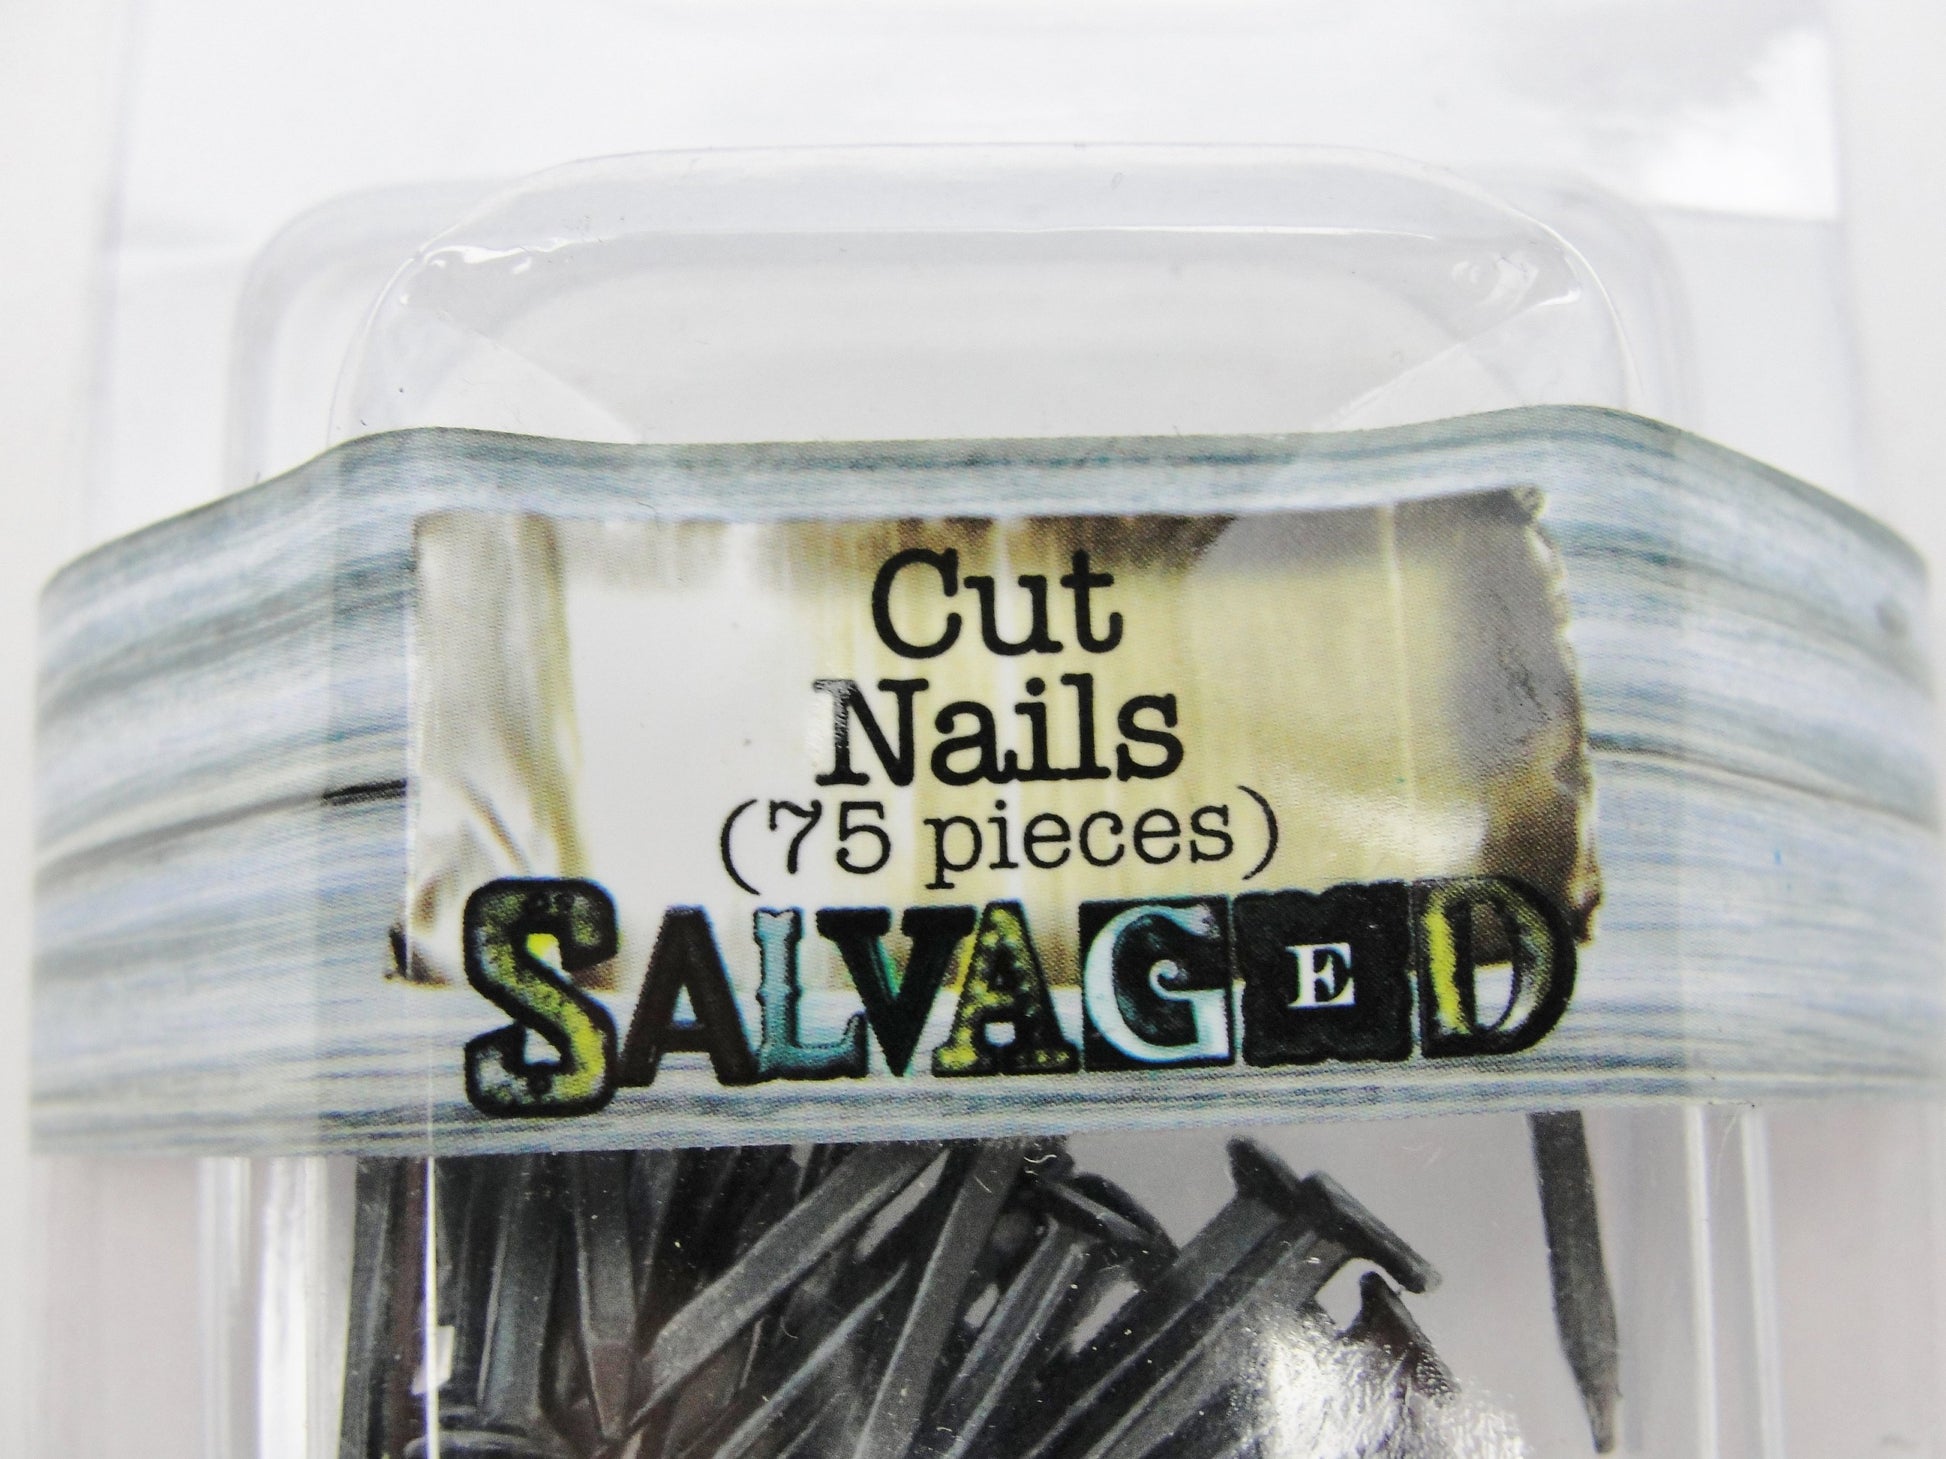 Small cut nails for mixed media art - Mixed Media Art Supplies - Craft Supply House